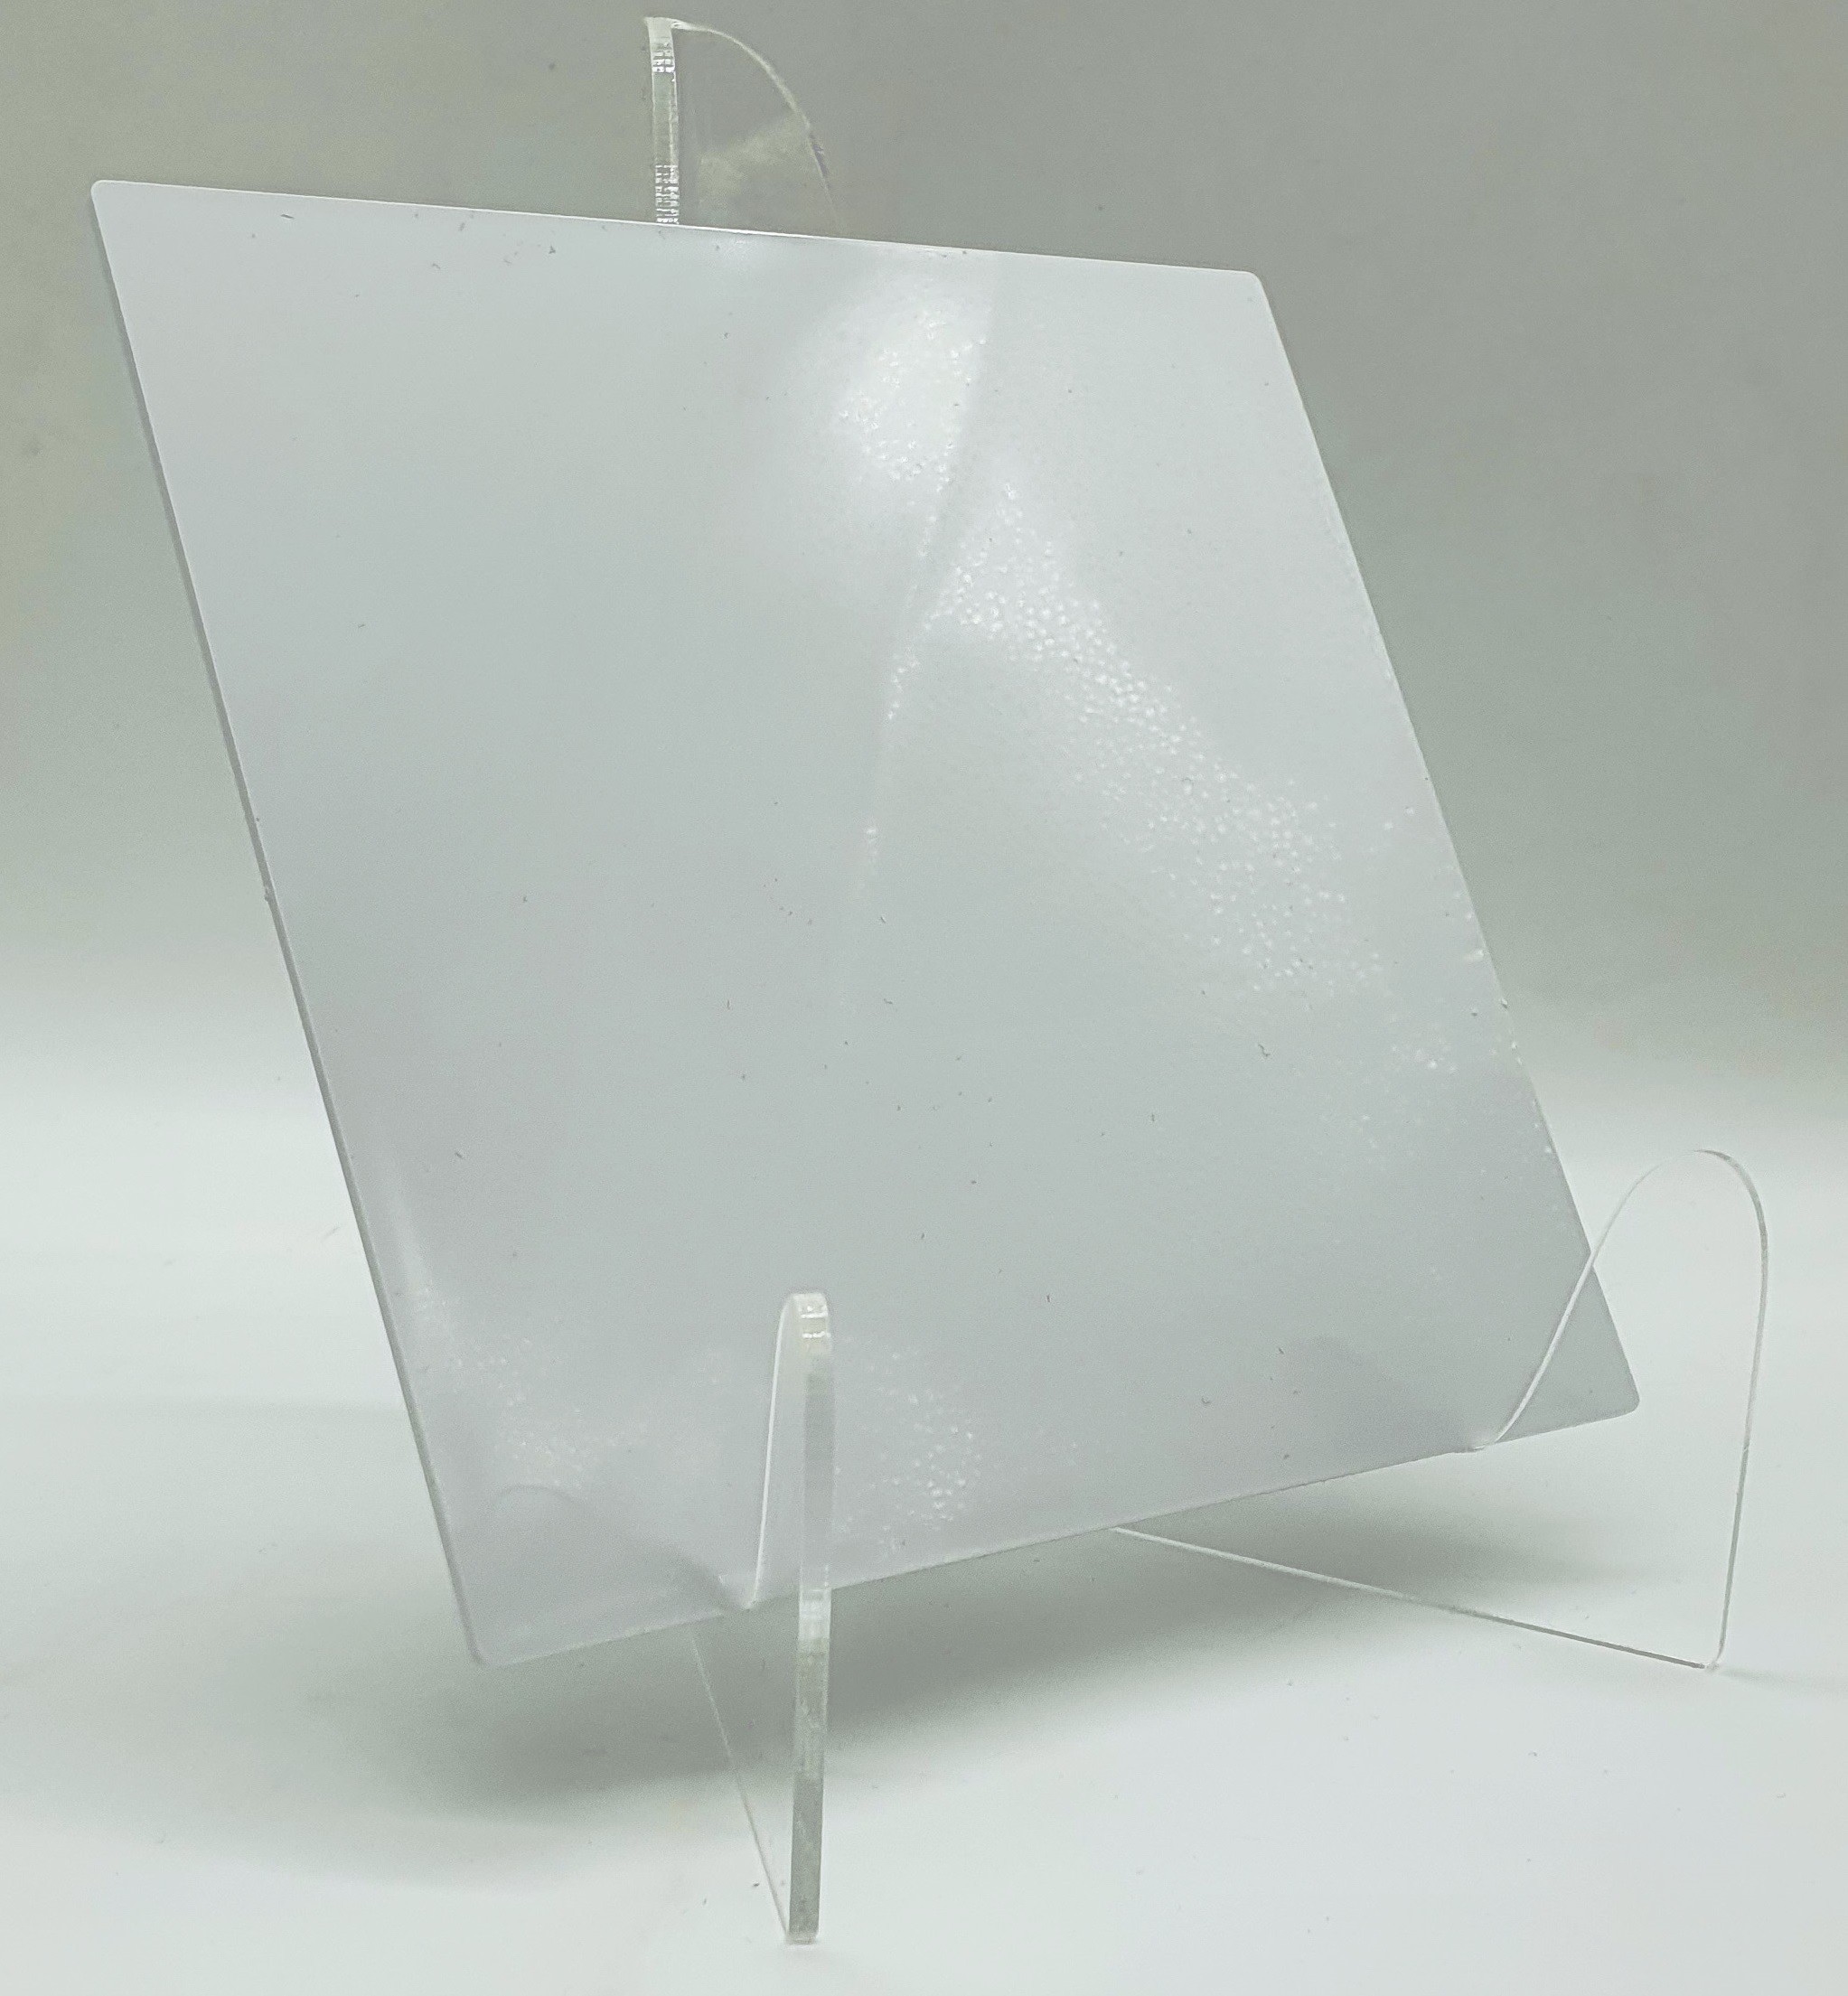 Крышка к вентилятору AirRoxy dRim Plexi белый глянец (01-183) цена 226.00 грн - фотография 2